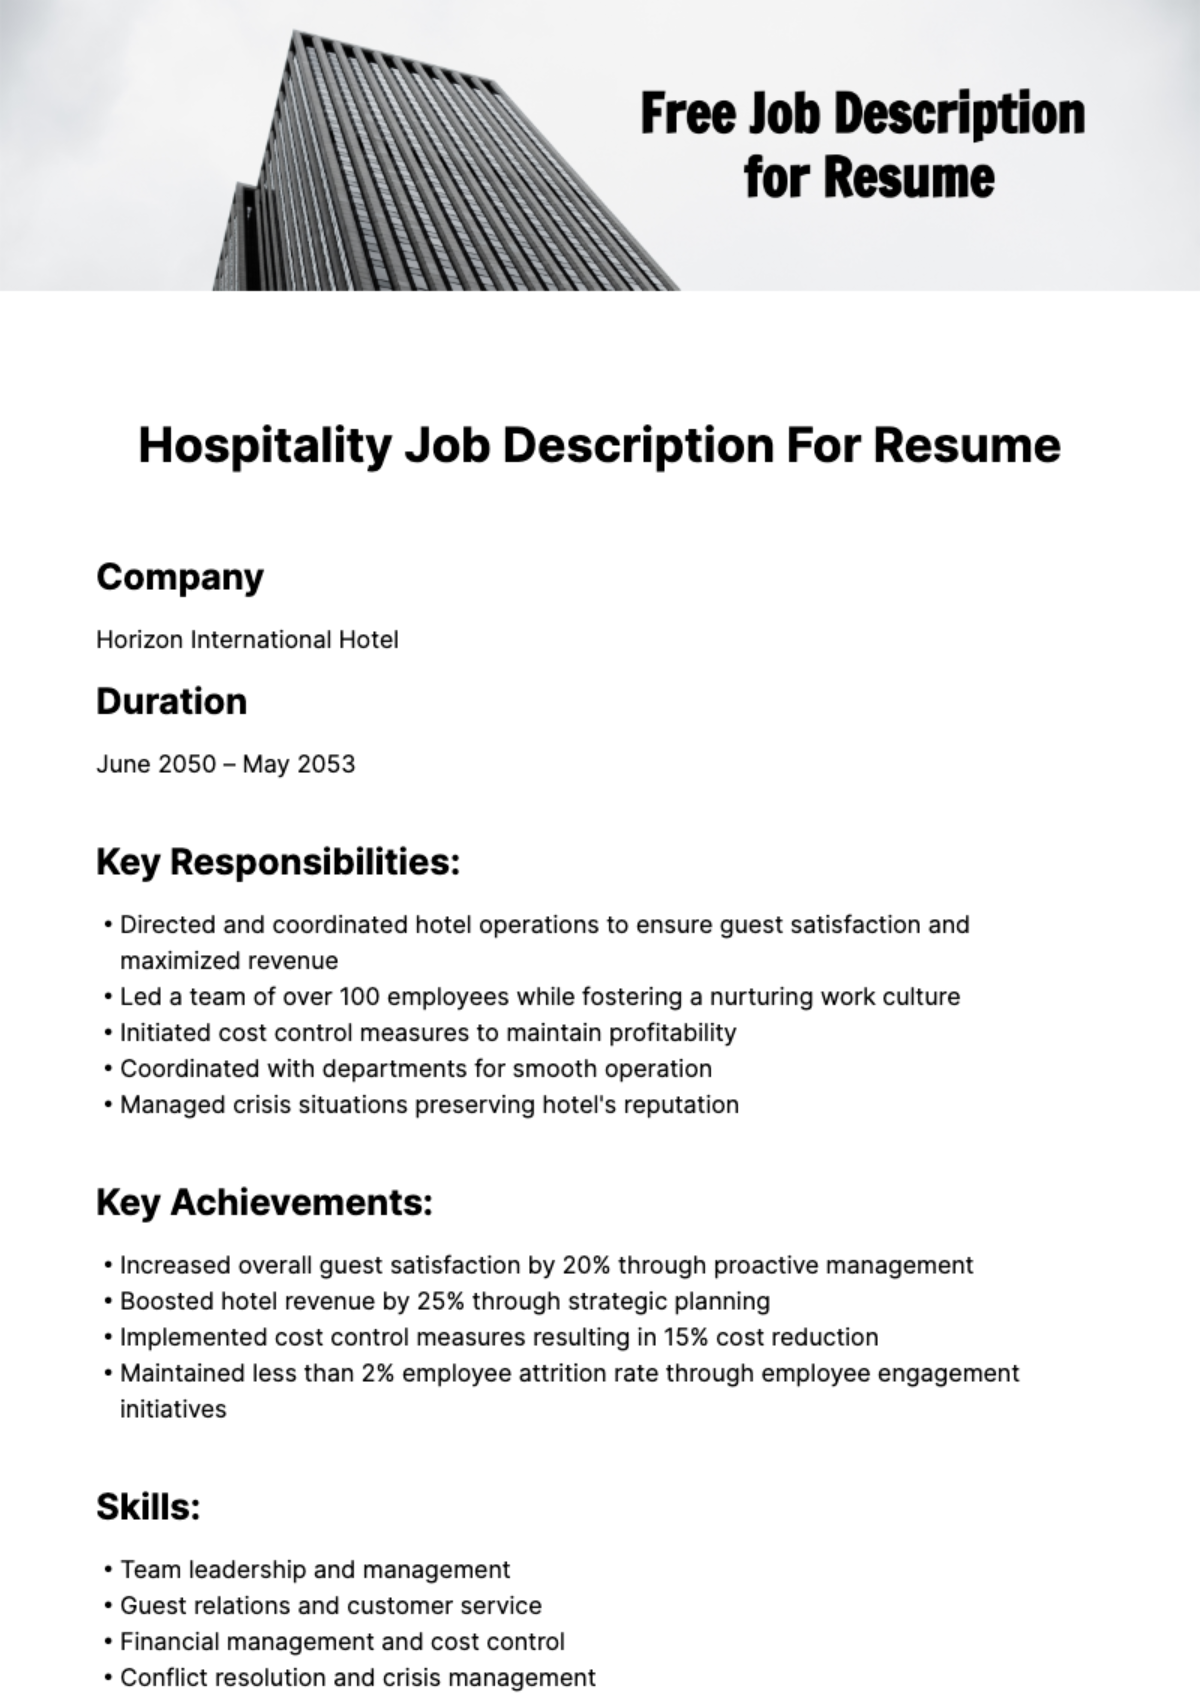 Free Hospitality Job Description For Resume Template